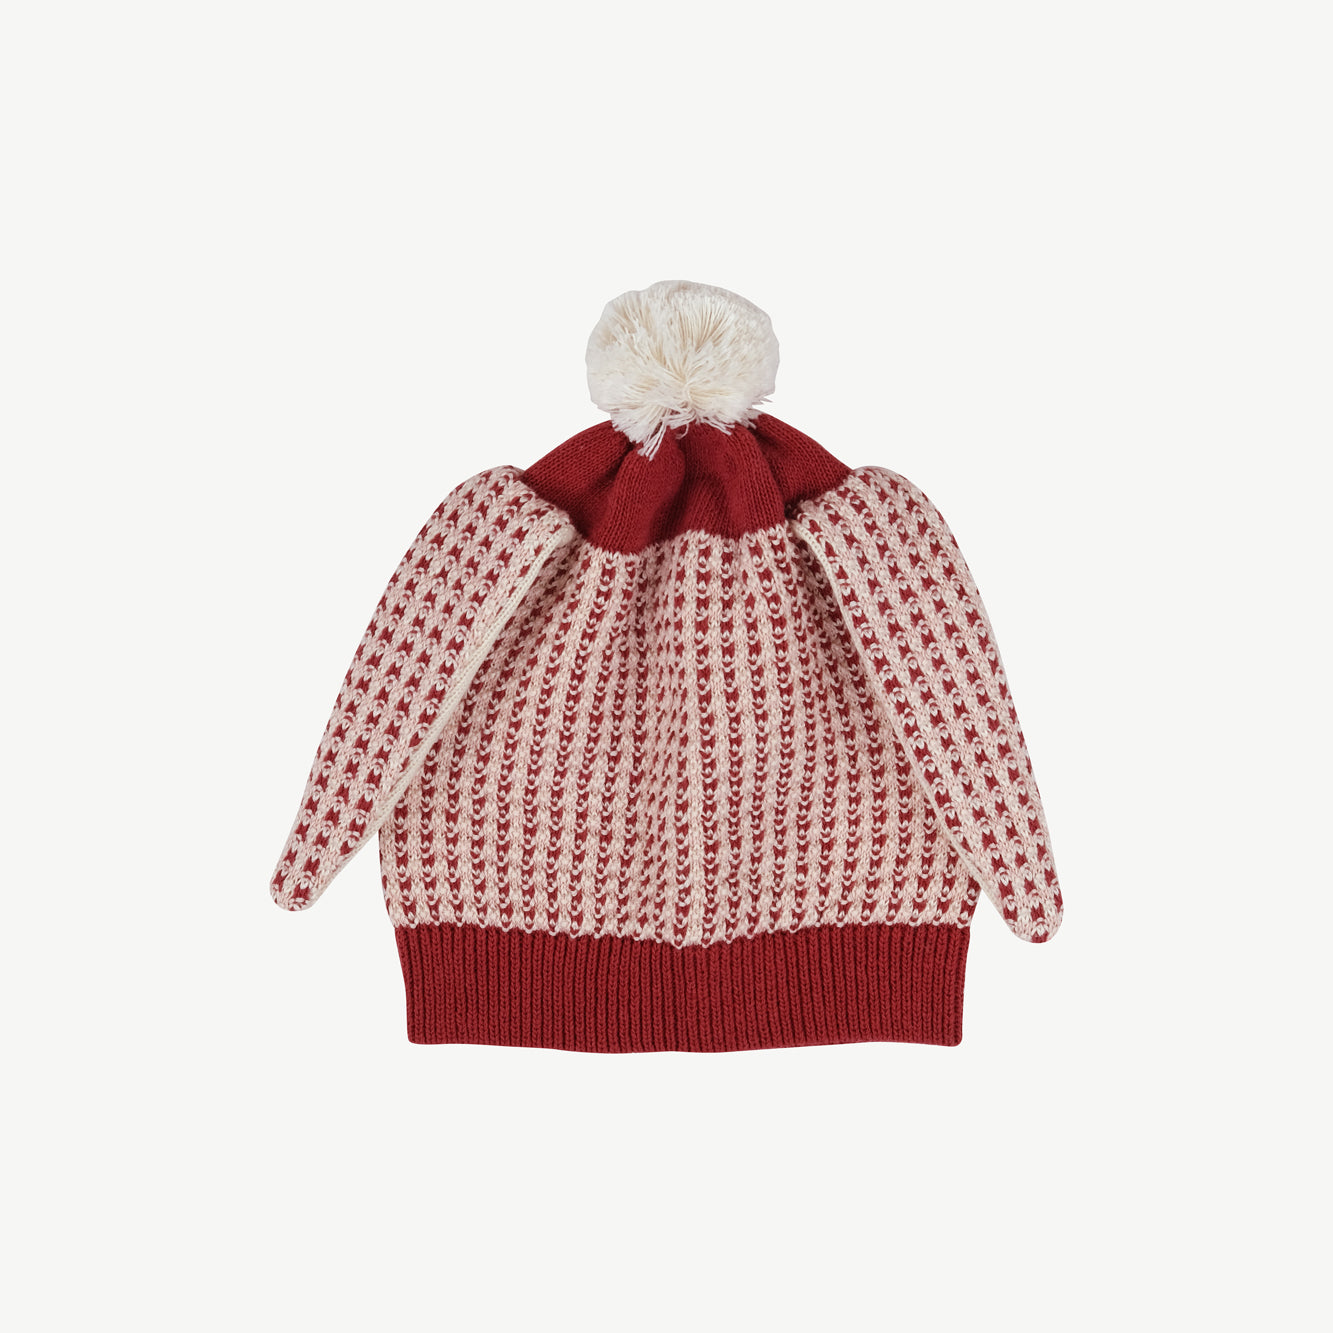 'multi' tibetan red knit bunny baby beanie